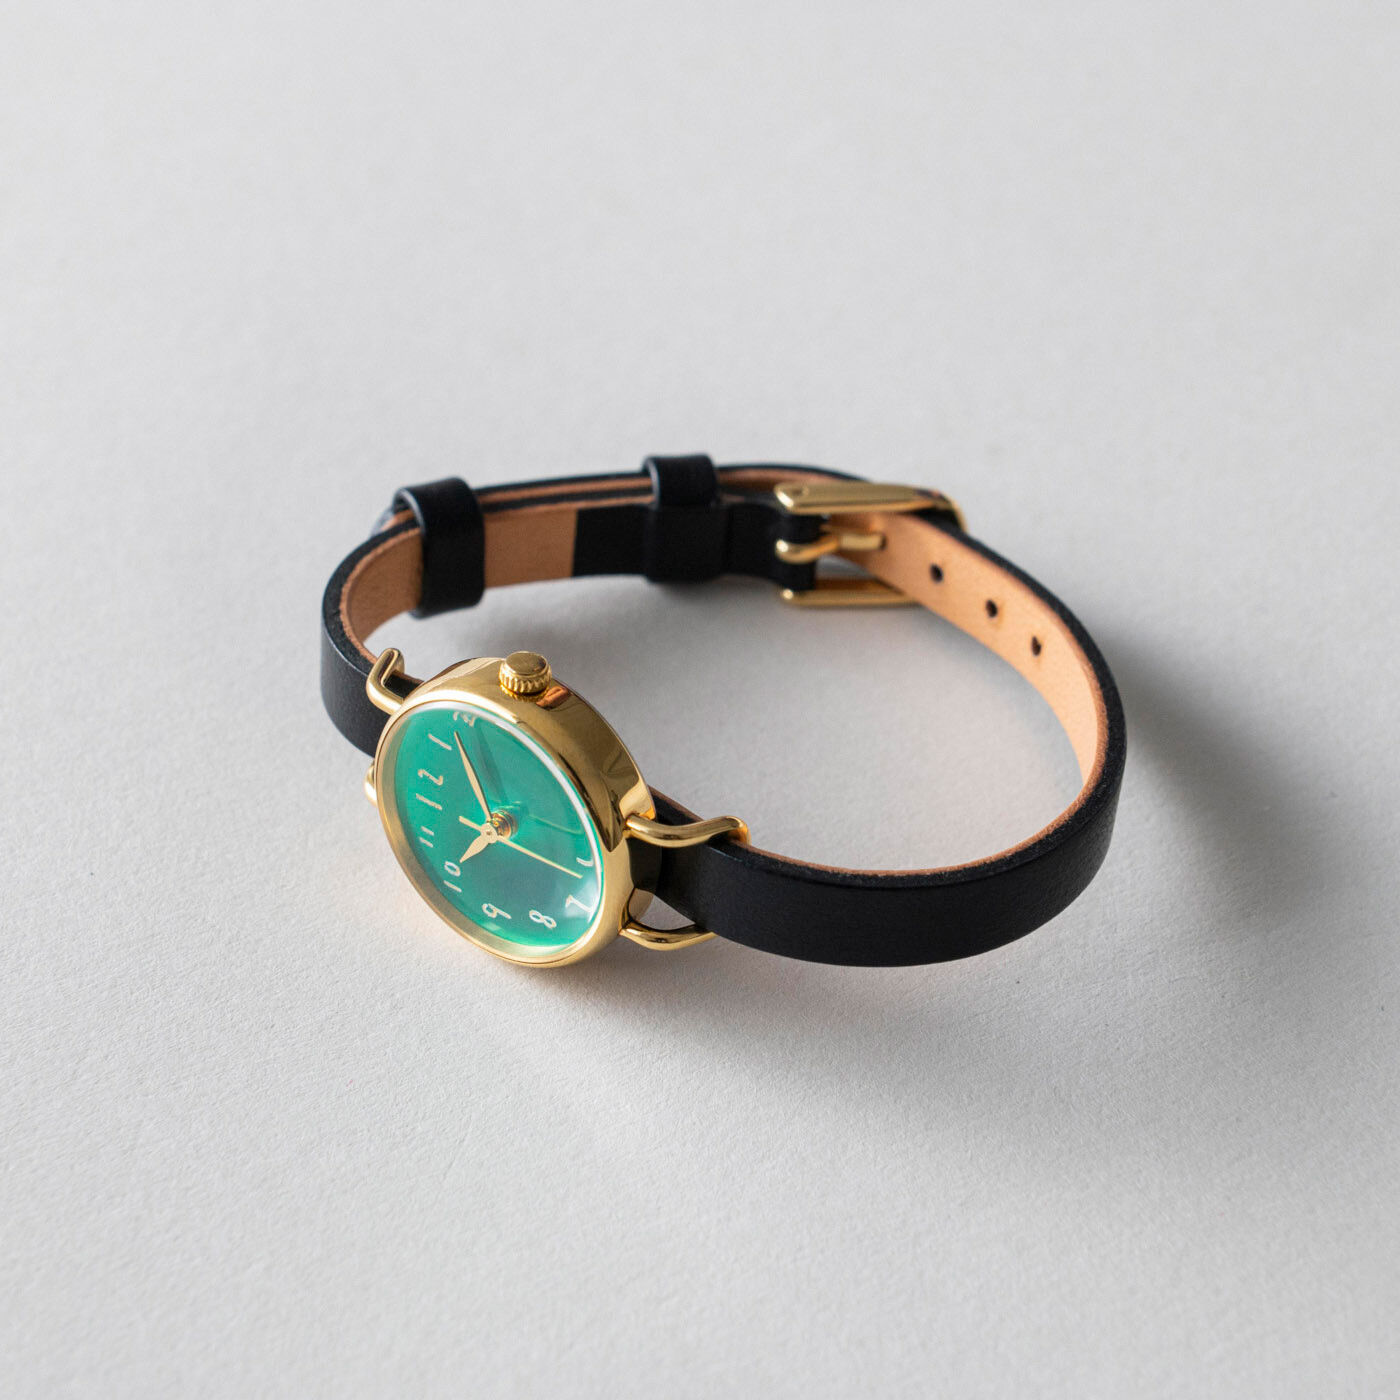 ＆Stories|金沢の時計職人が手掛けた　聖なる森の翠色に見惚れる腕時計〈ブラック〉|本革のベルトは翠色が引き立つブラック。